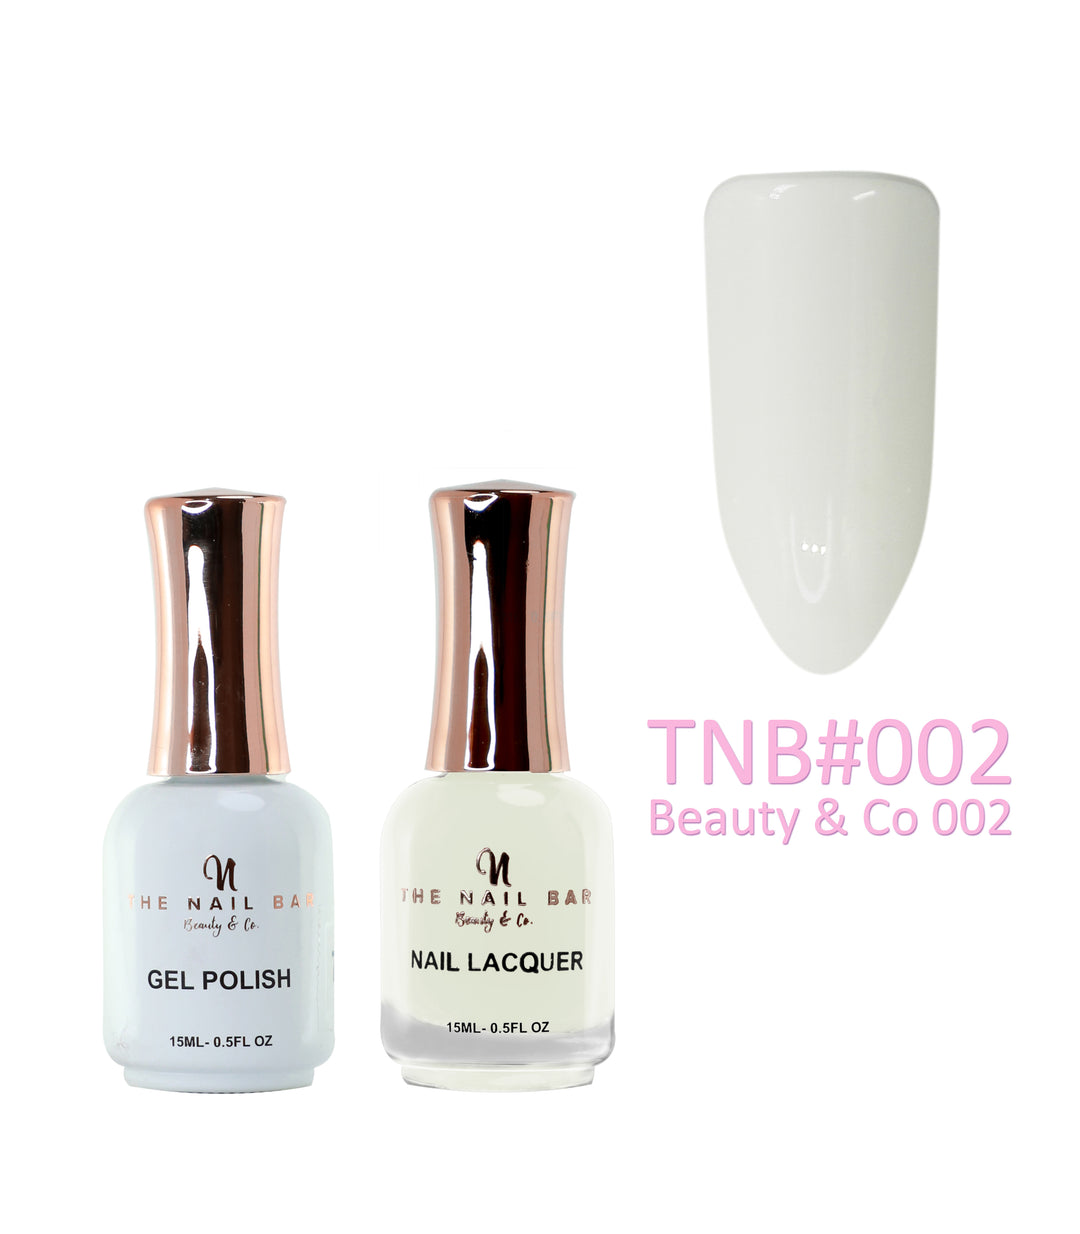 Dual Polish/Gel colour matching (15ml) -  Beauty & Co 002 - The Nail Bar Beauty & Co.